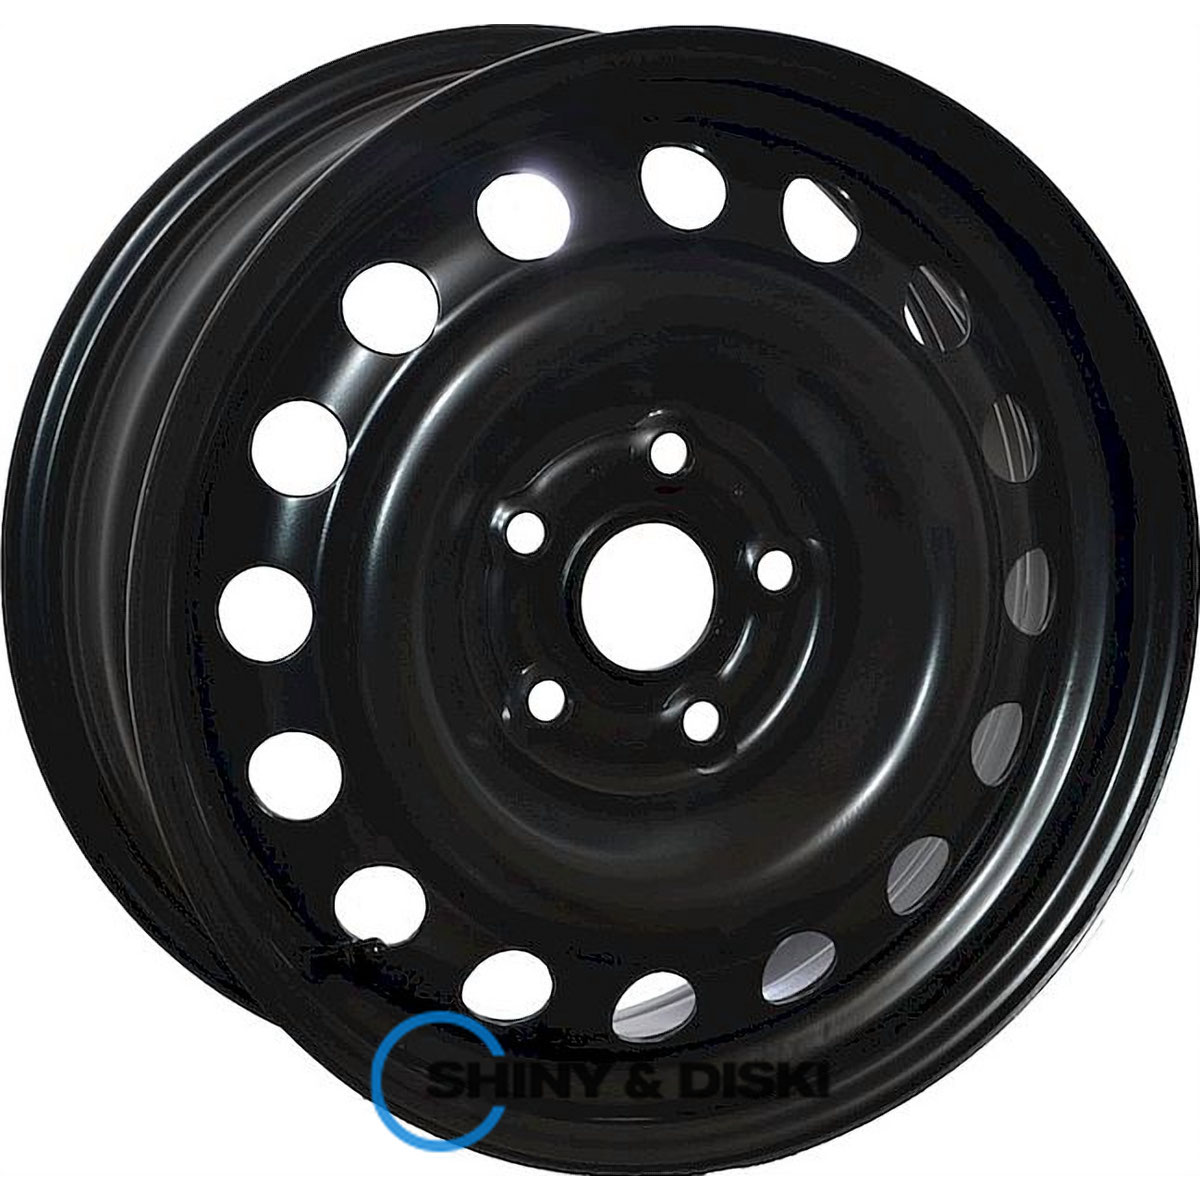 av wheels (black) volkswagen oem r16 w6.5 pcd5x112 e42 dia57.1